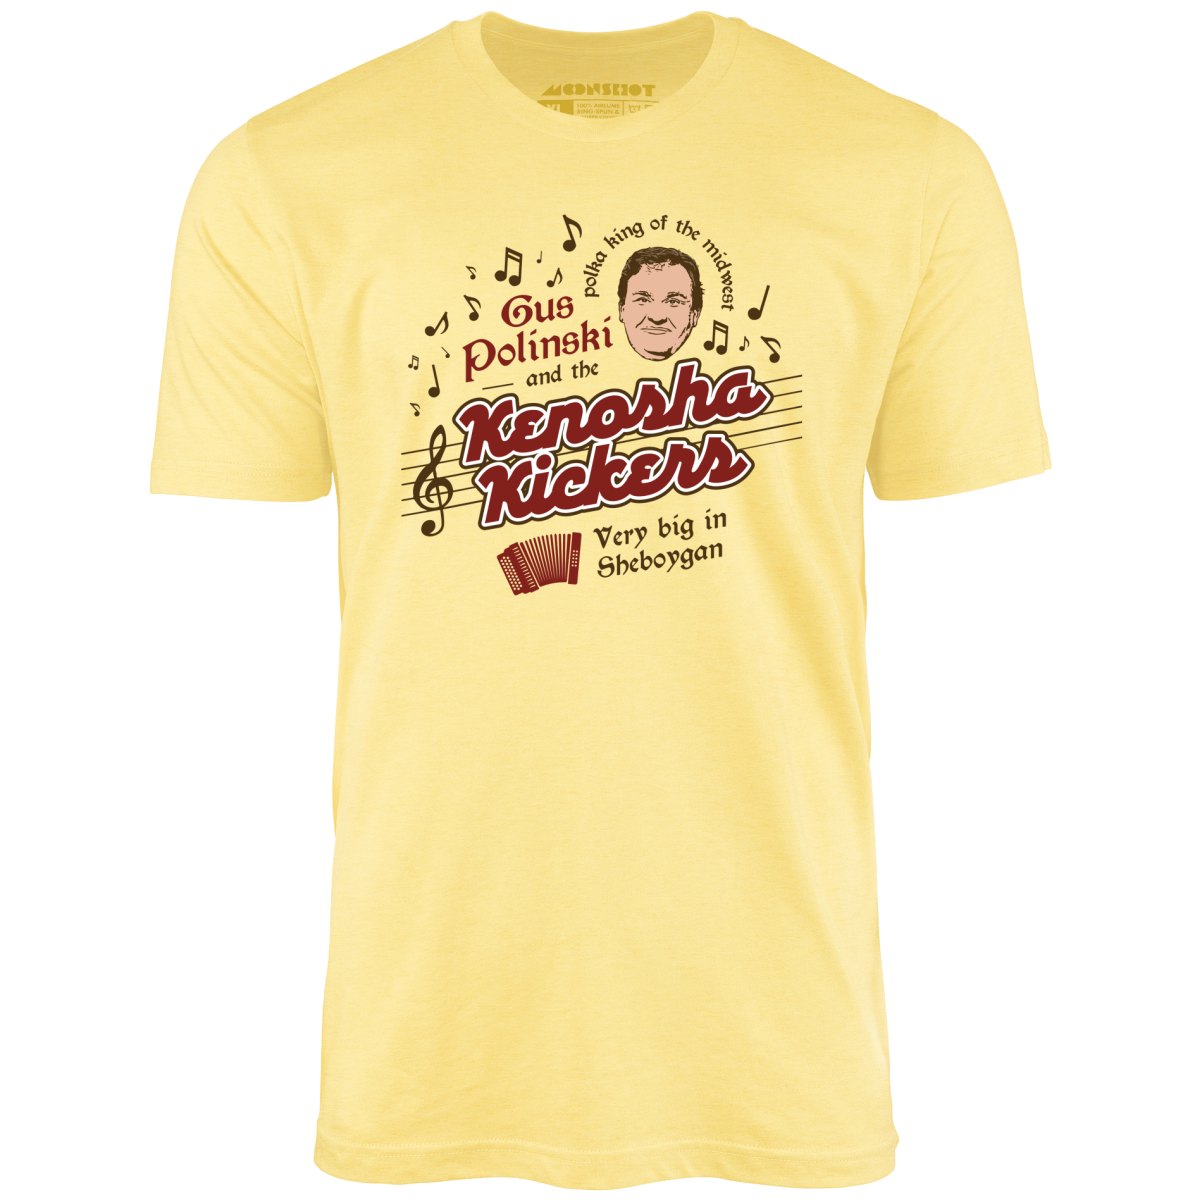 Gus Polinski and The Kenosha Kickers - Unisex T-Shirt